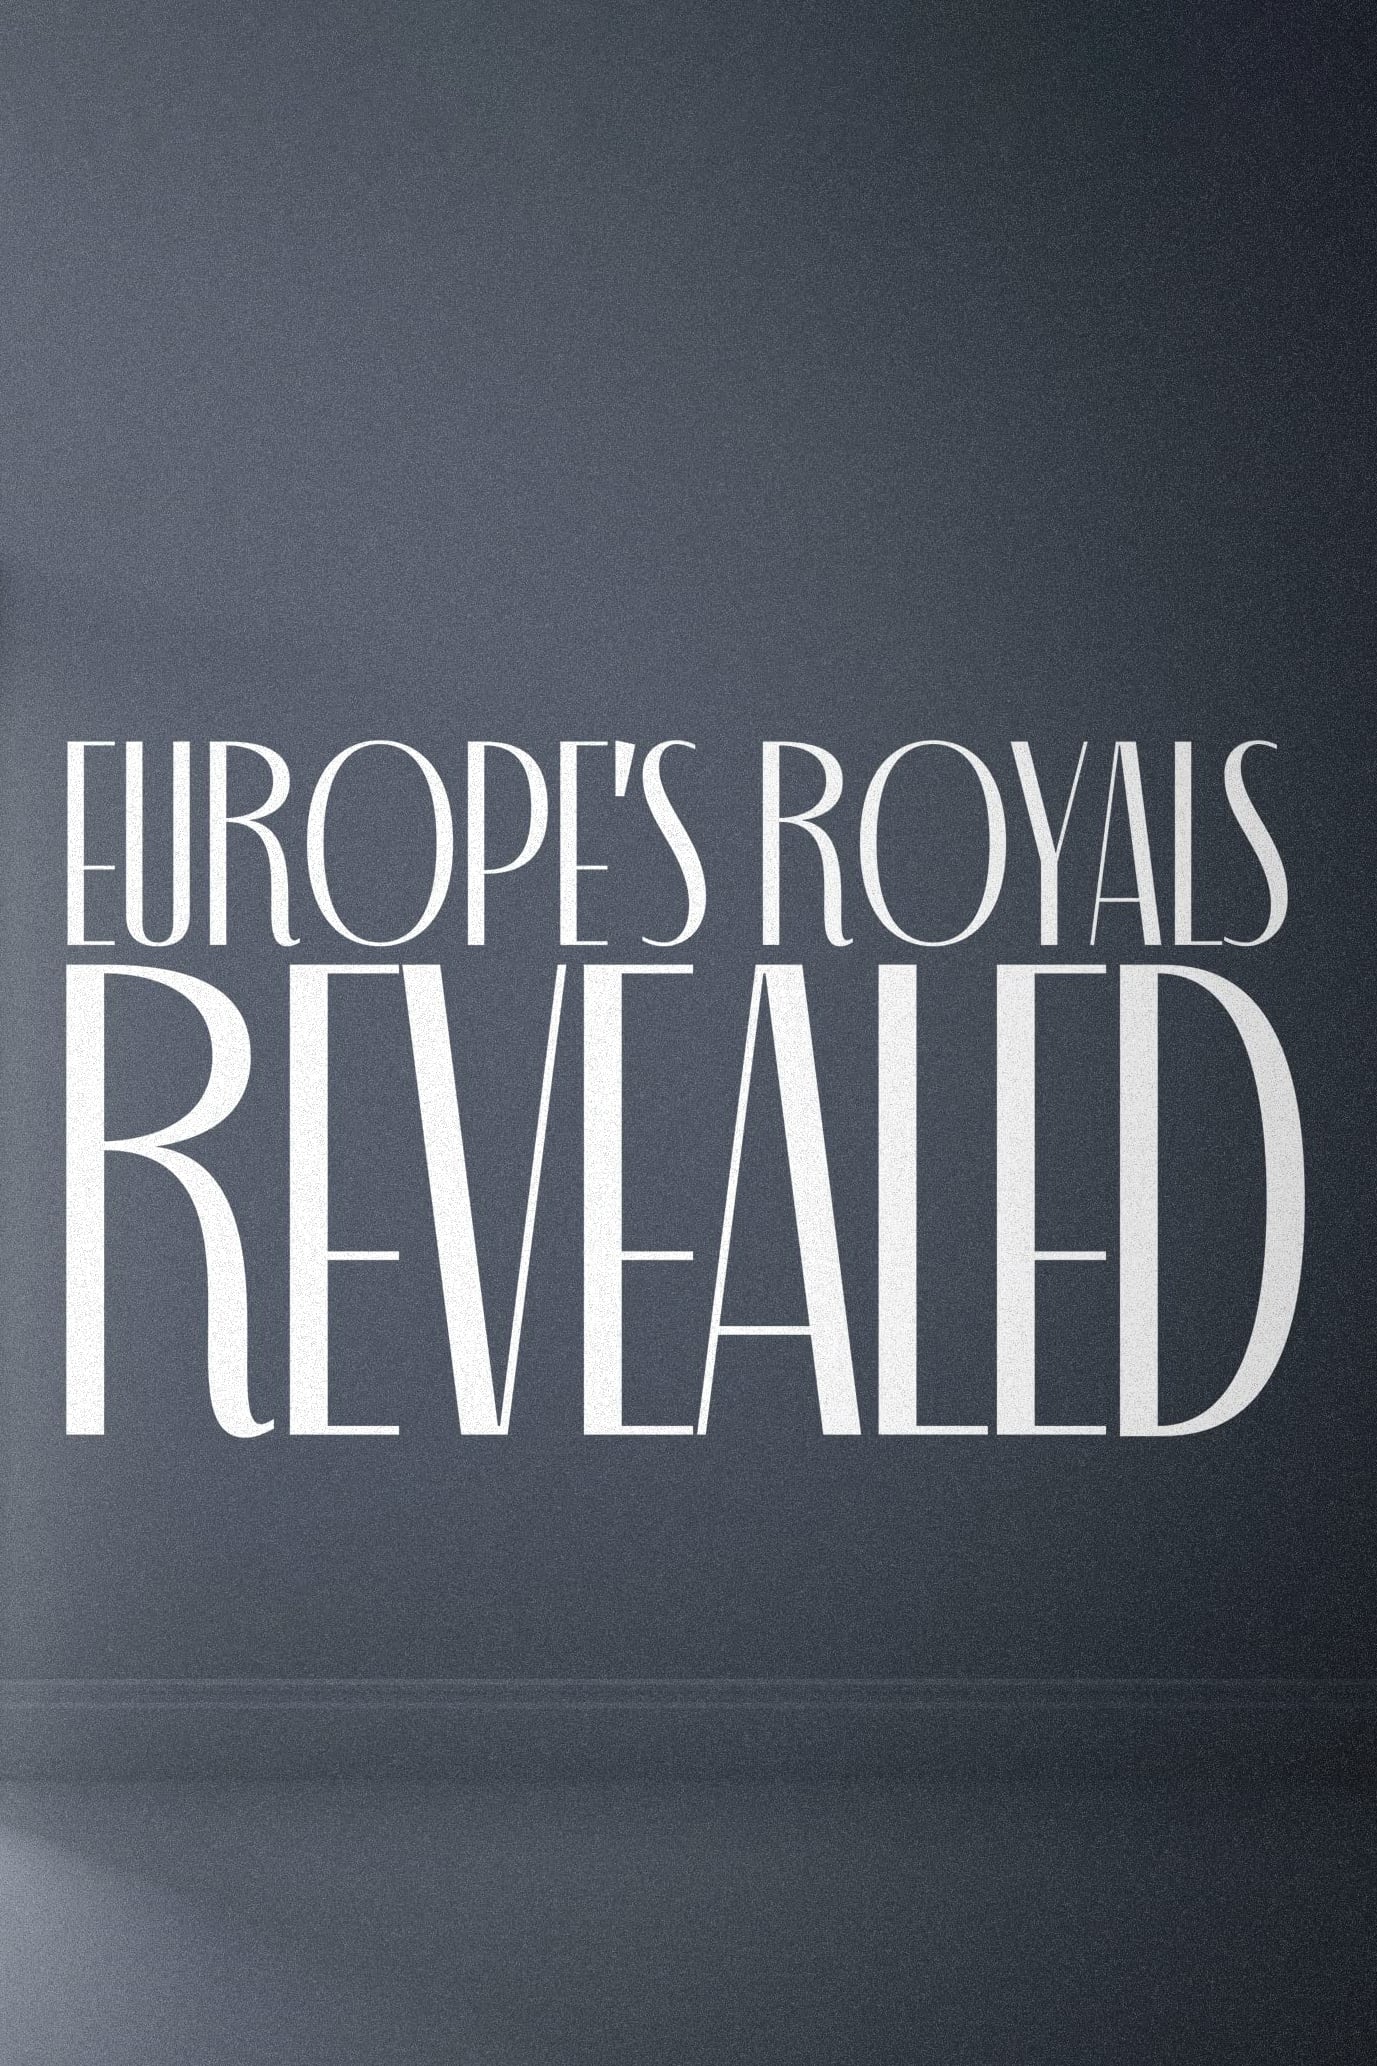 Europe's Royals Revealed